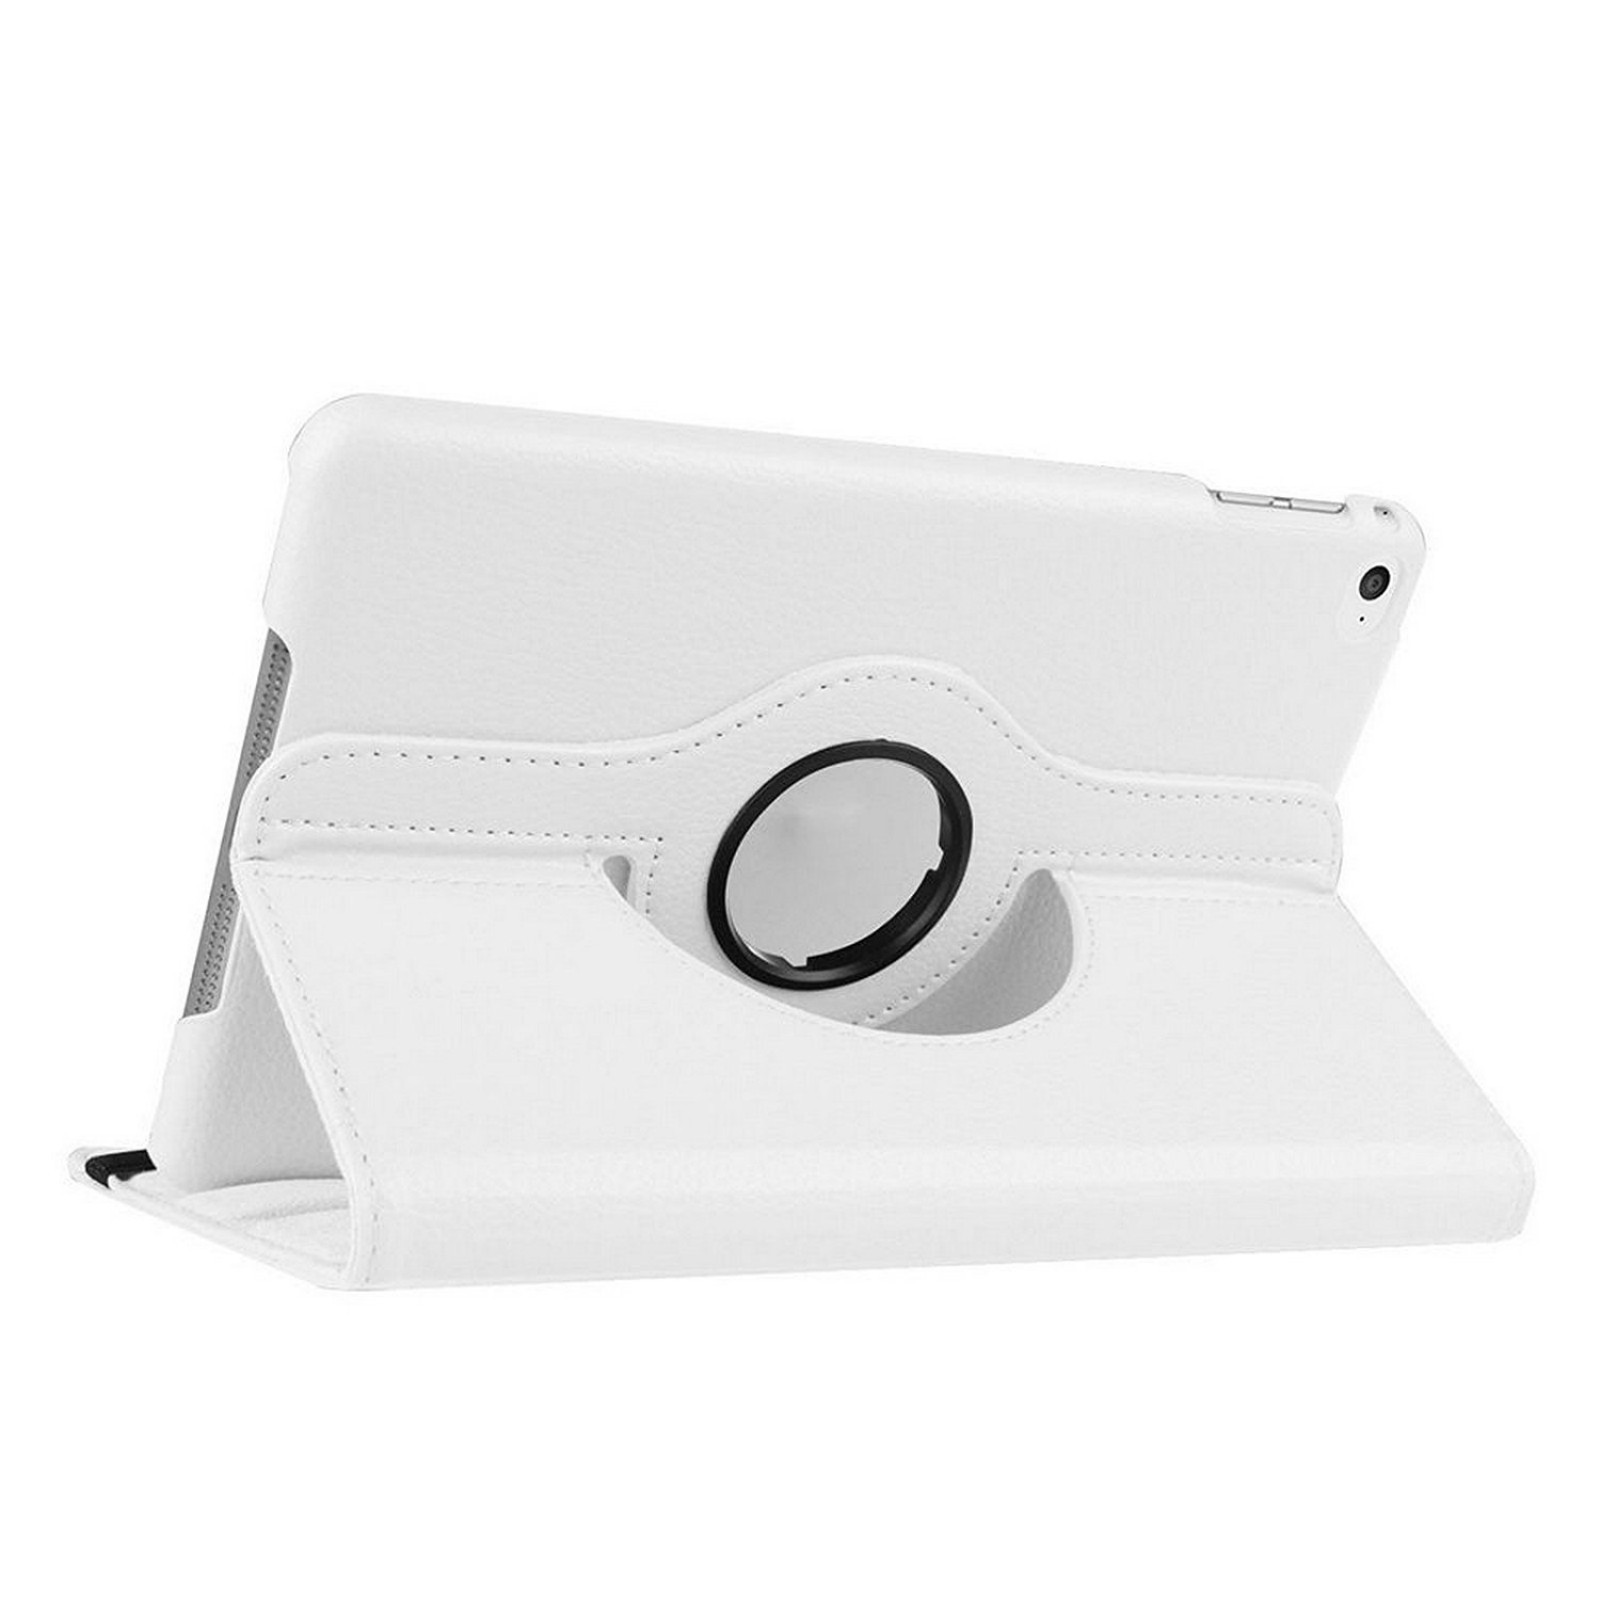 custodia eco PELLE bianca FLIP CASE stand 360° protezione per apple iPad AIR 